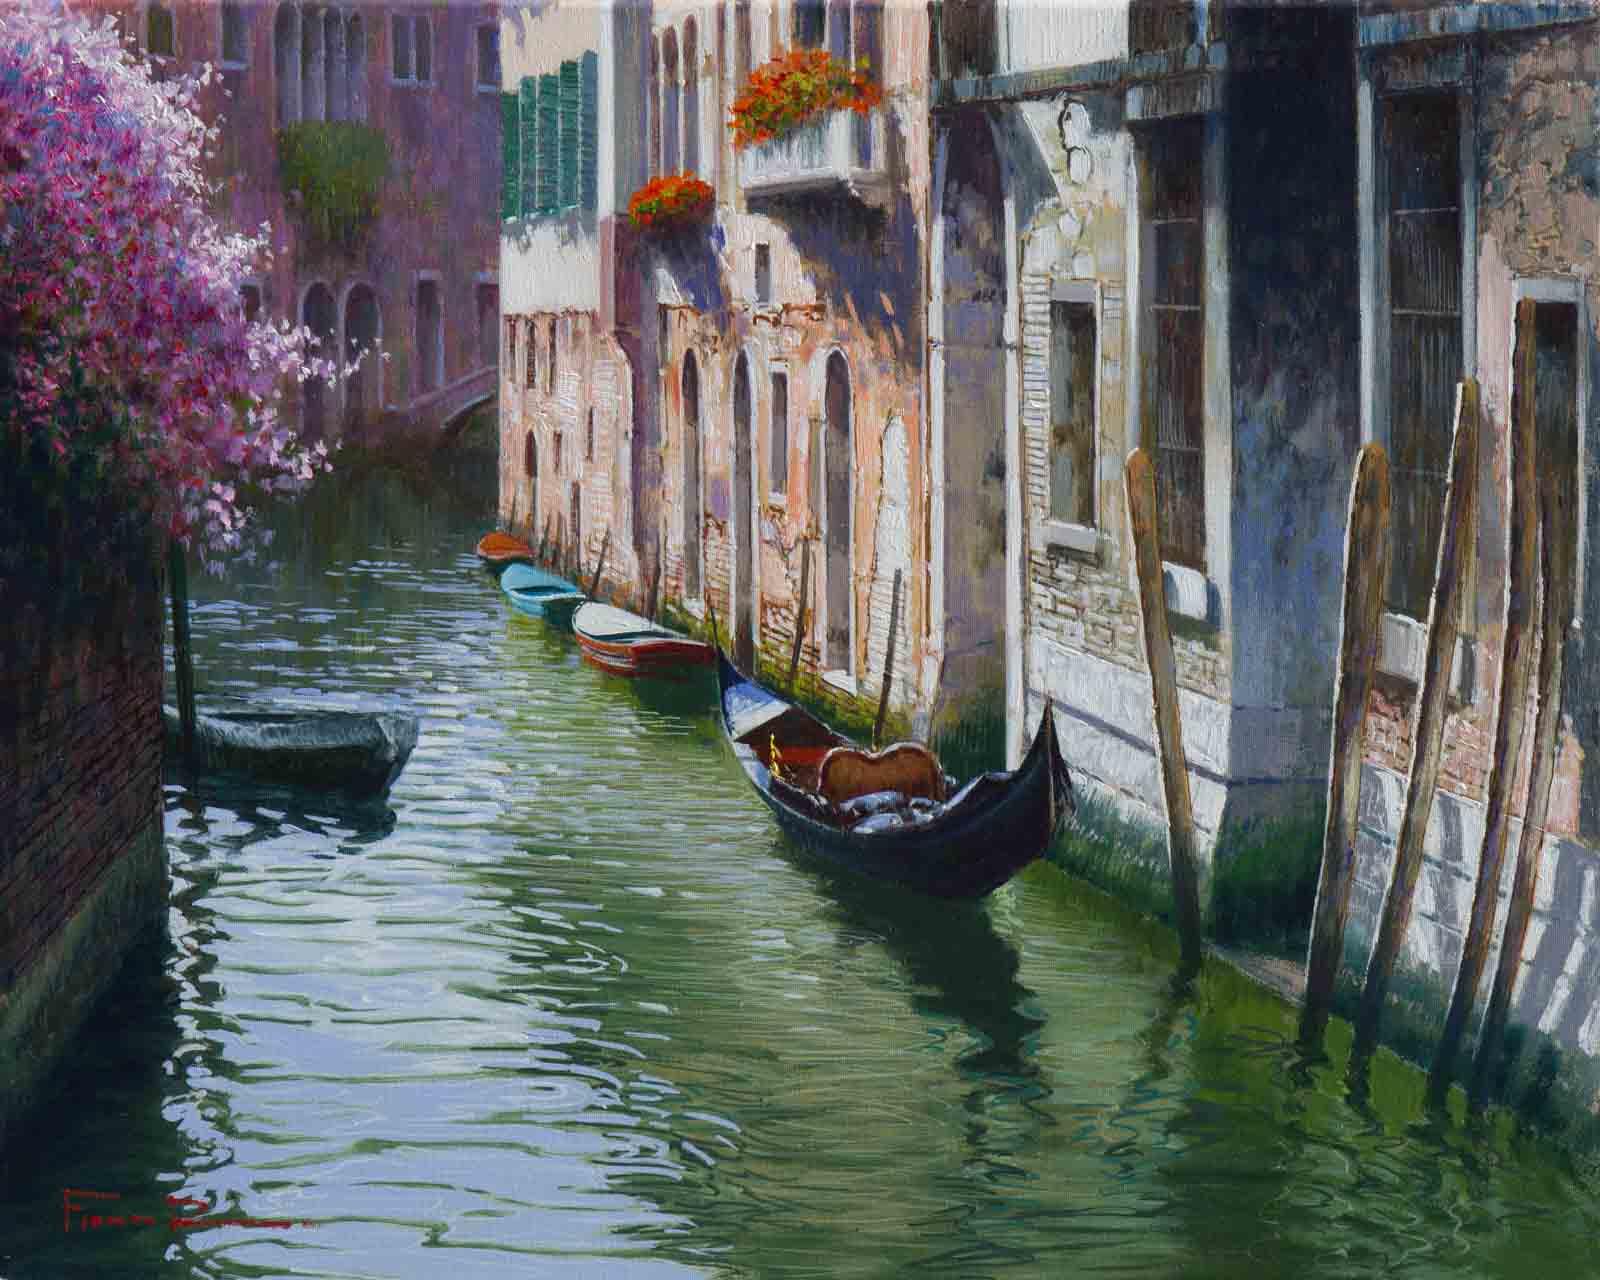 Venetian Canal II